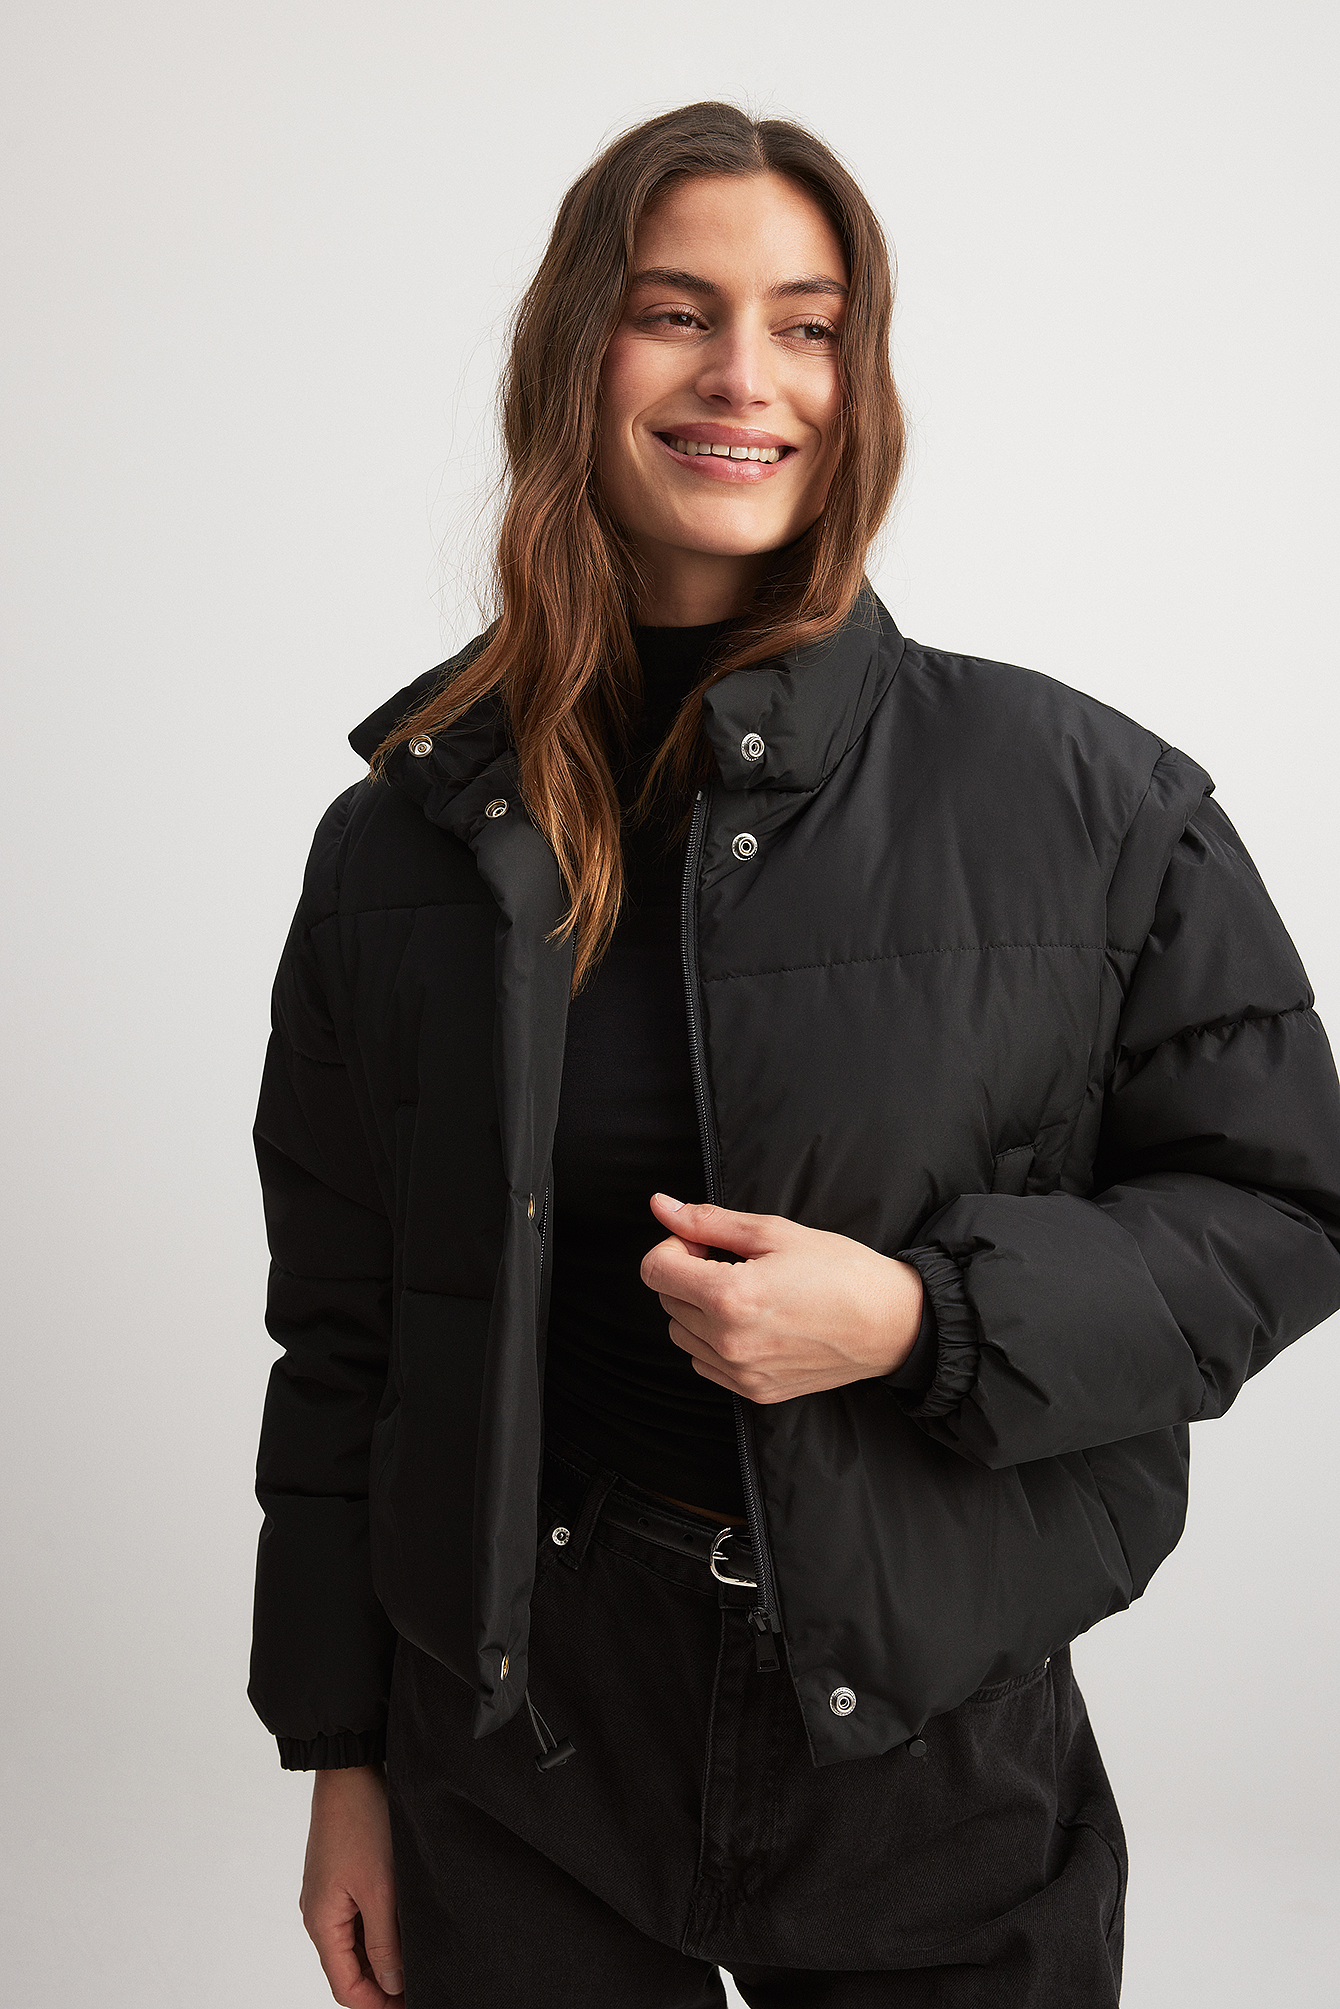 Winter Jacket Missguided sports ski jacket with bum bag, Women's